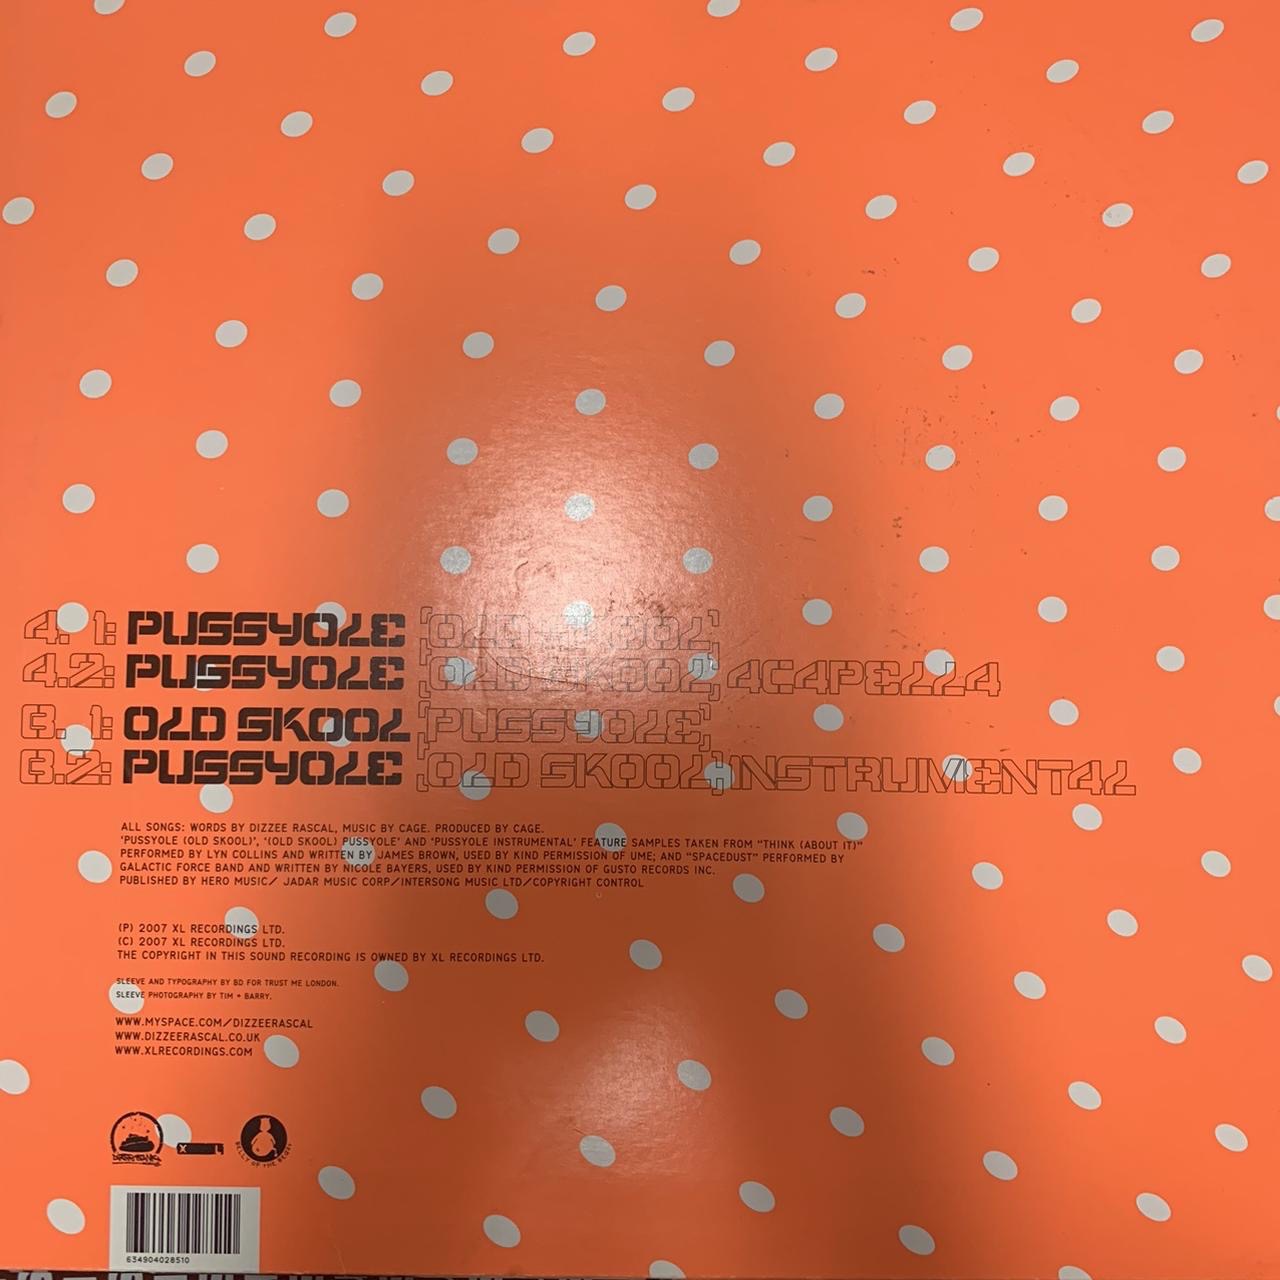 Dizzee Rascal “Pussyole” 4 Track 12inch Vinyl Single